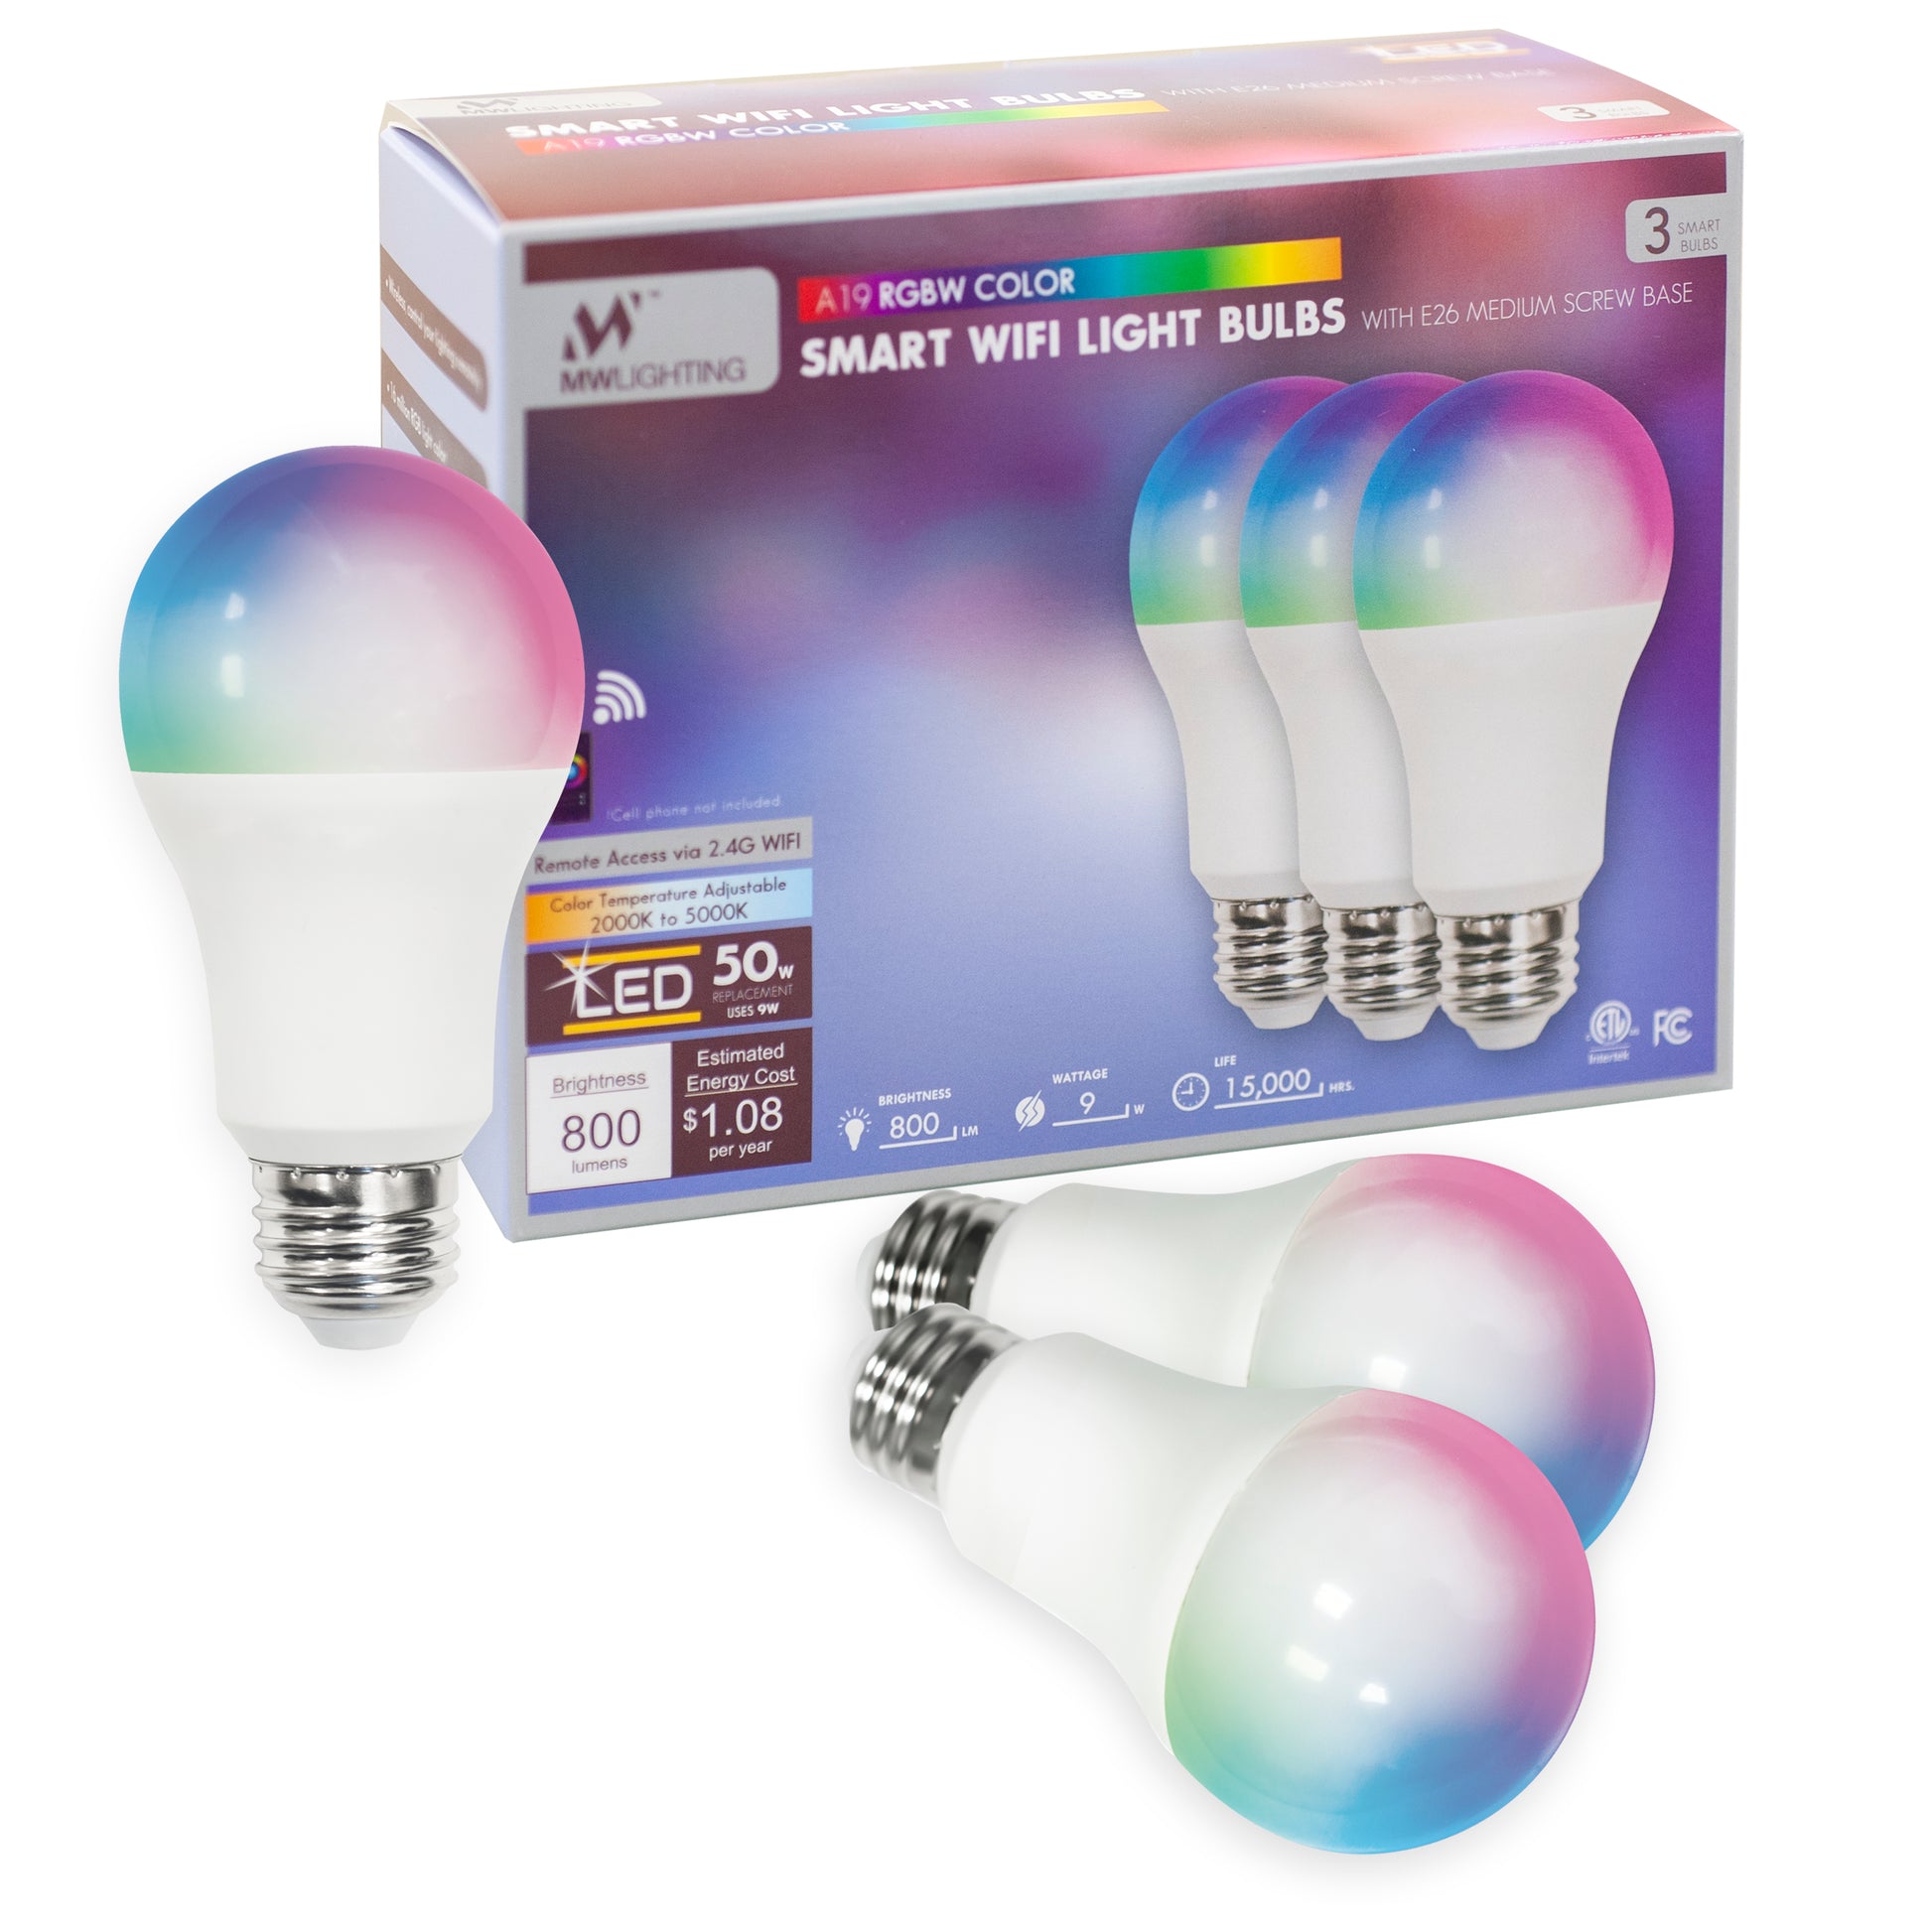 MW Lighting 3pack A19 LED RGBW Smart WIFI Bulb, E26 Screw Base